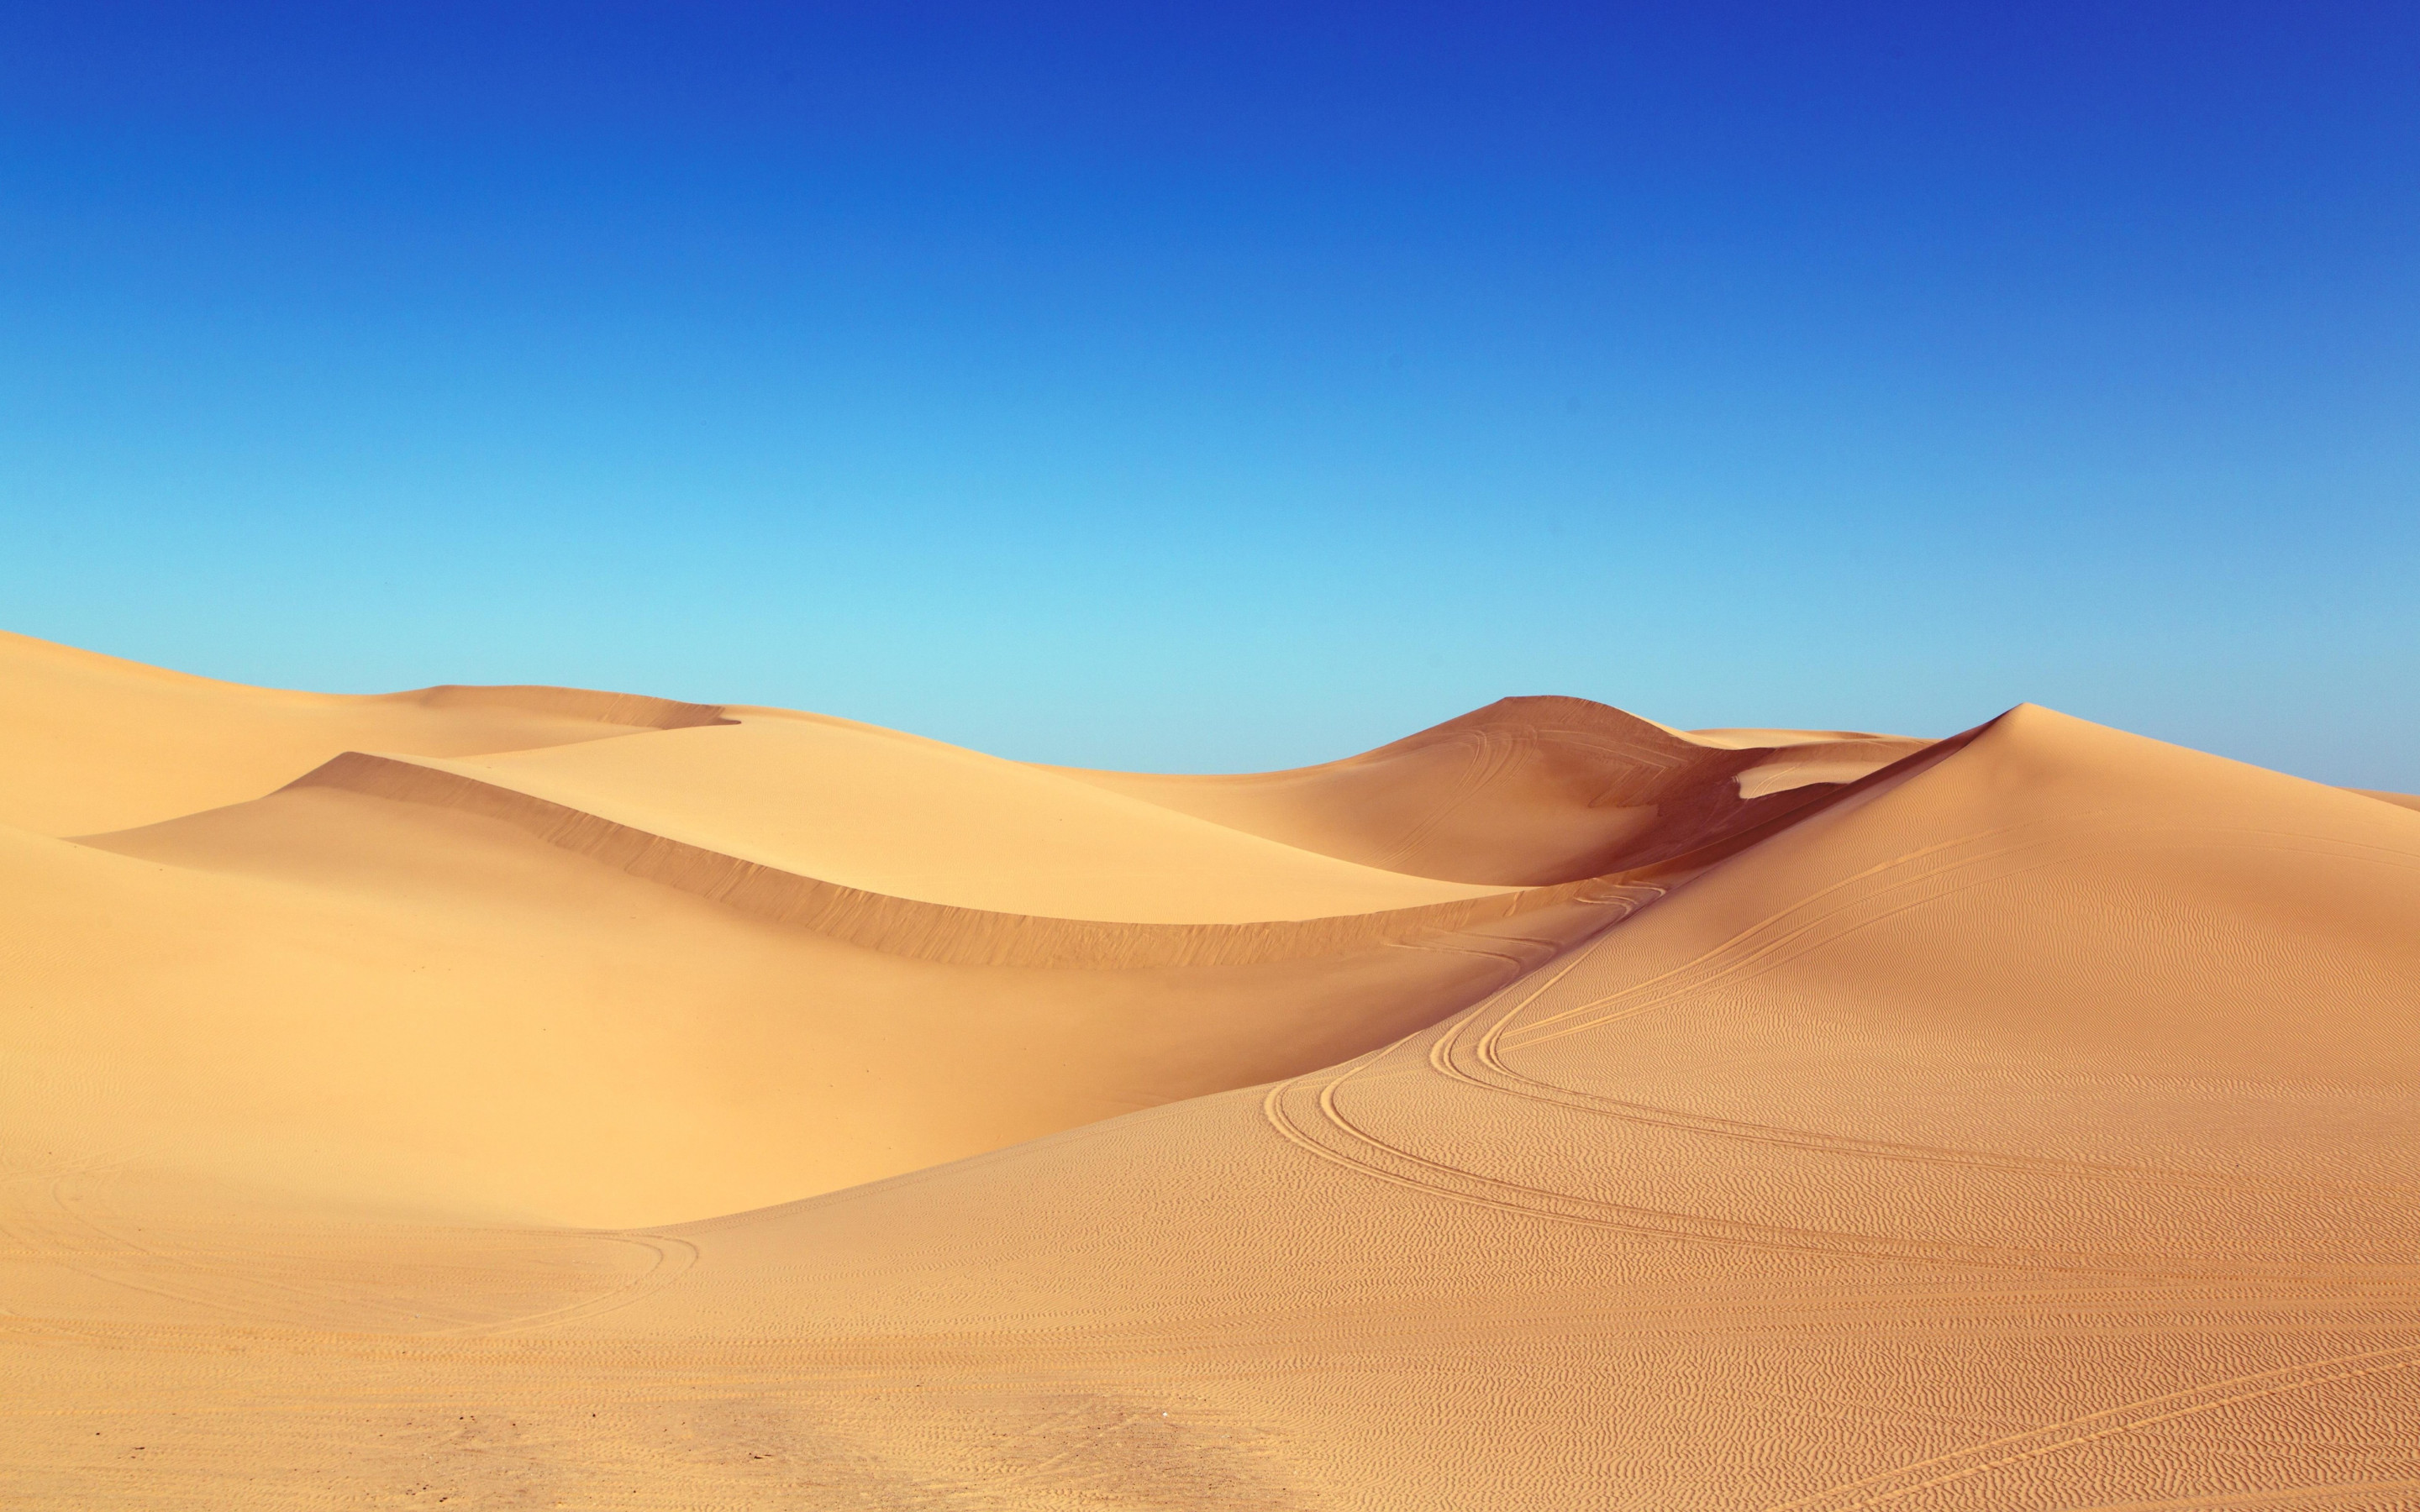 Blue sky and desert dunes wallpaper 2880x1800